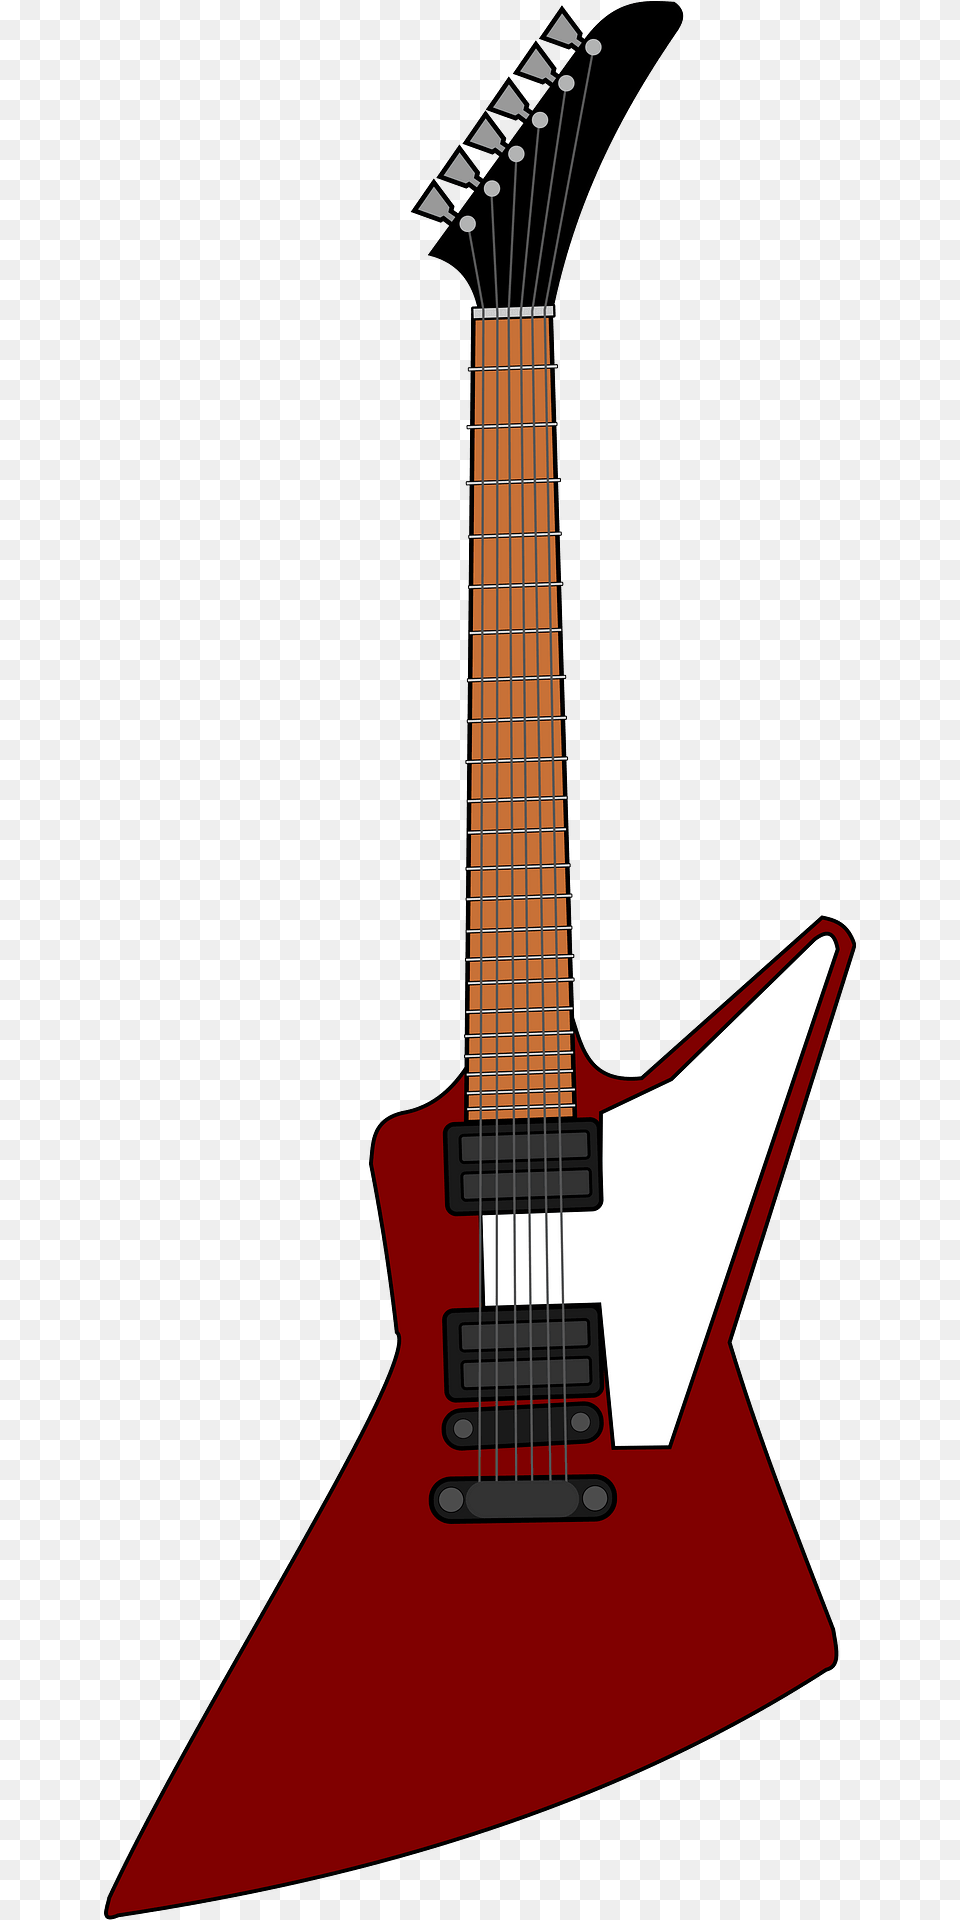 Gibson Explorer Brown Clipart, Electric Guitar, Guitar, Musical Instrument, Bass Guitar Png